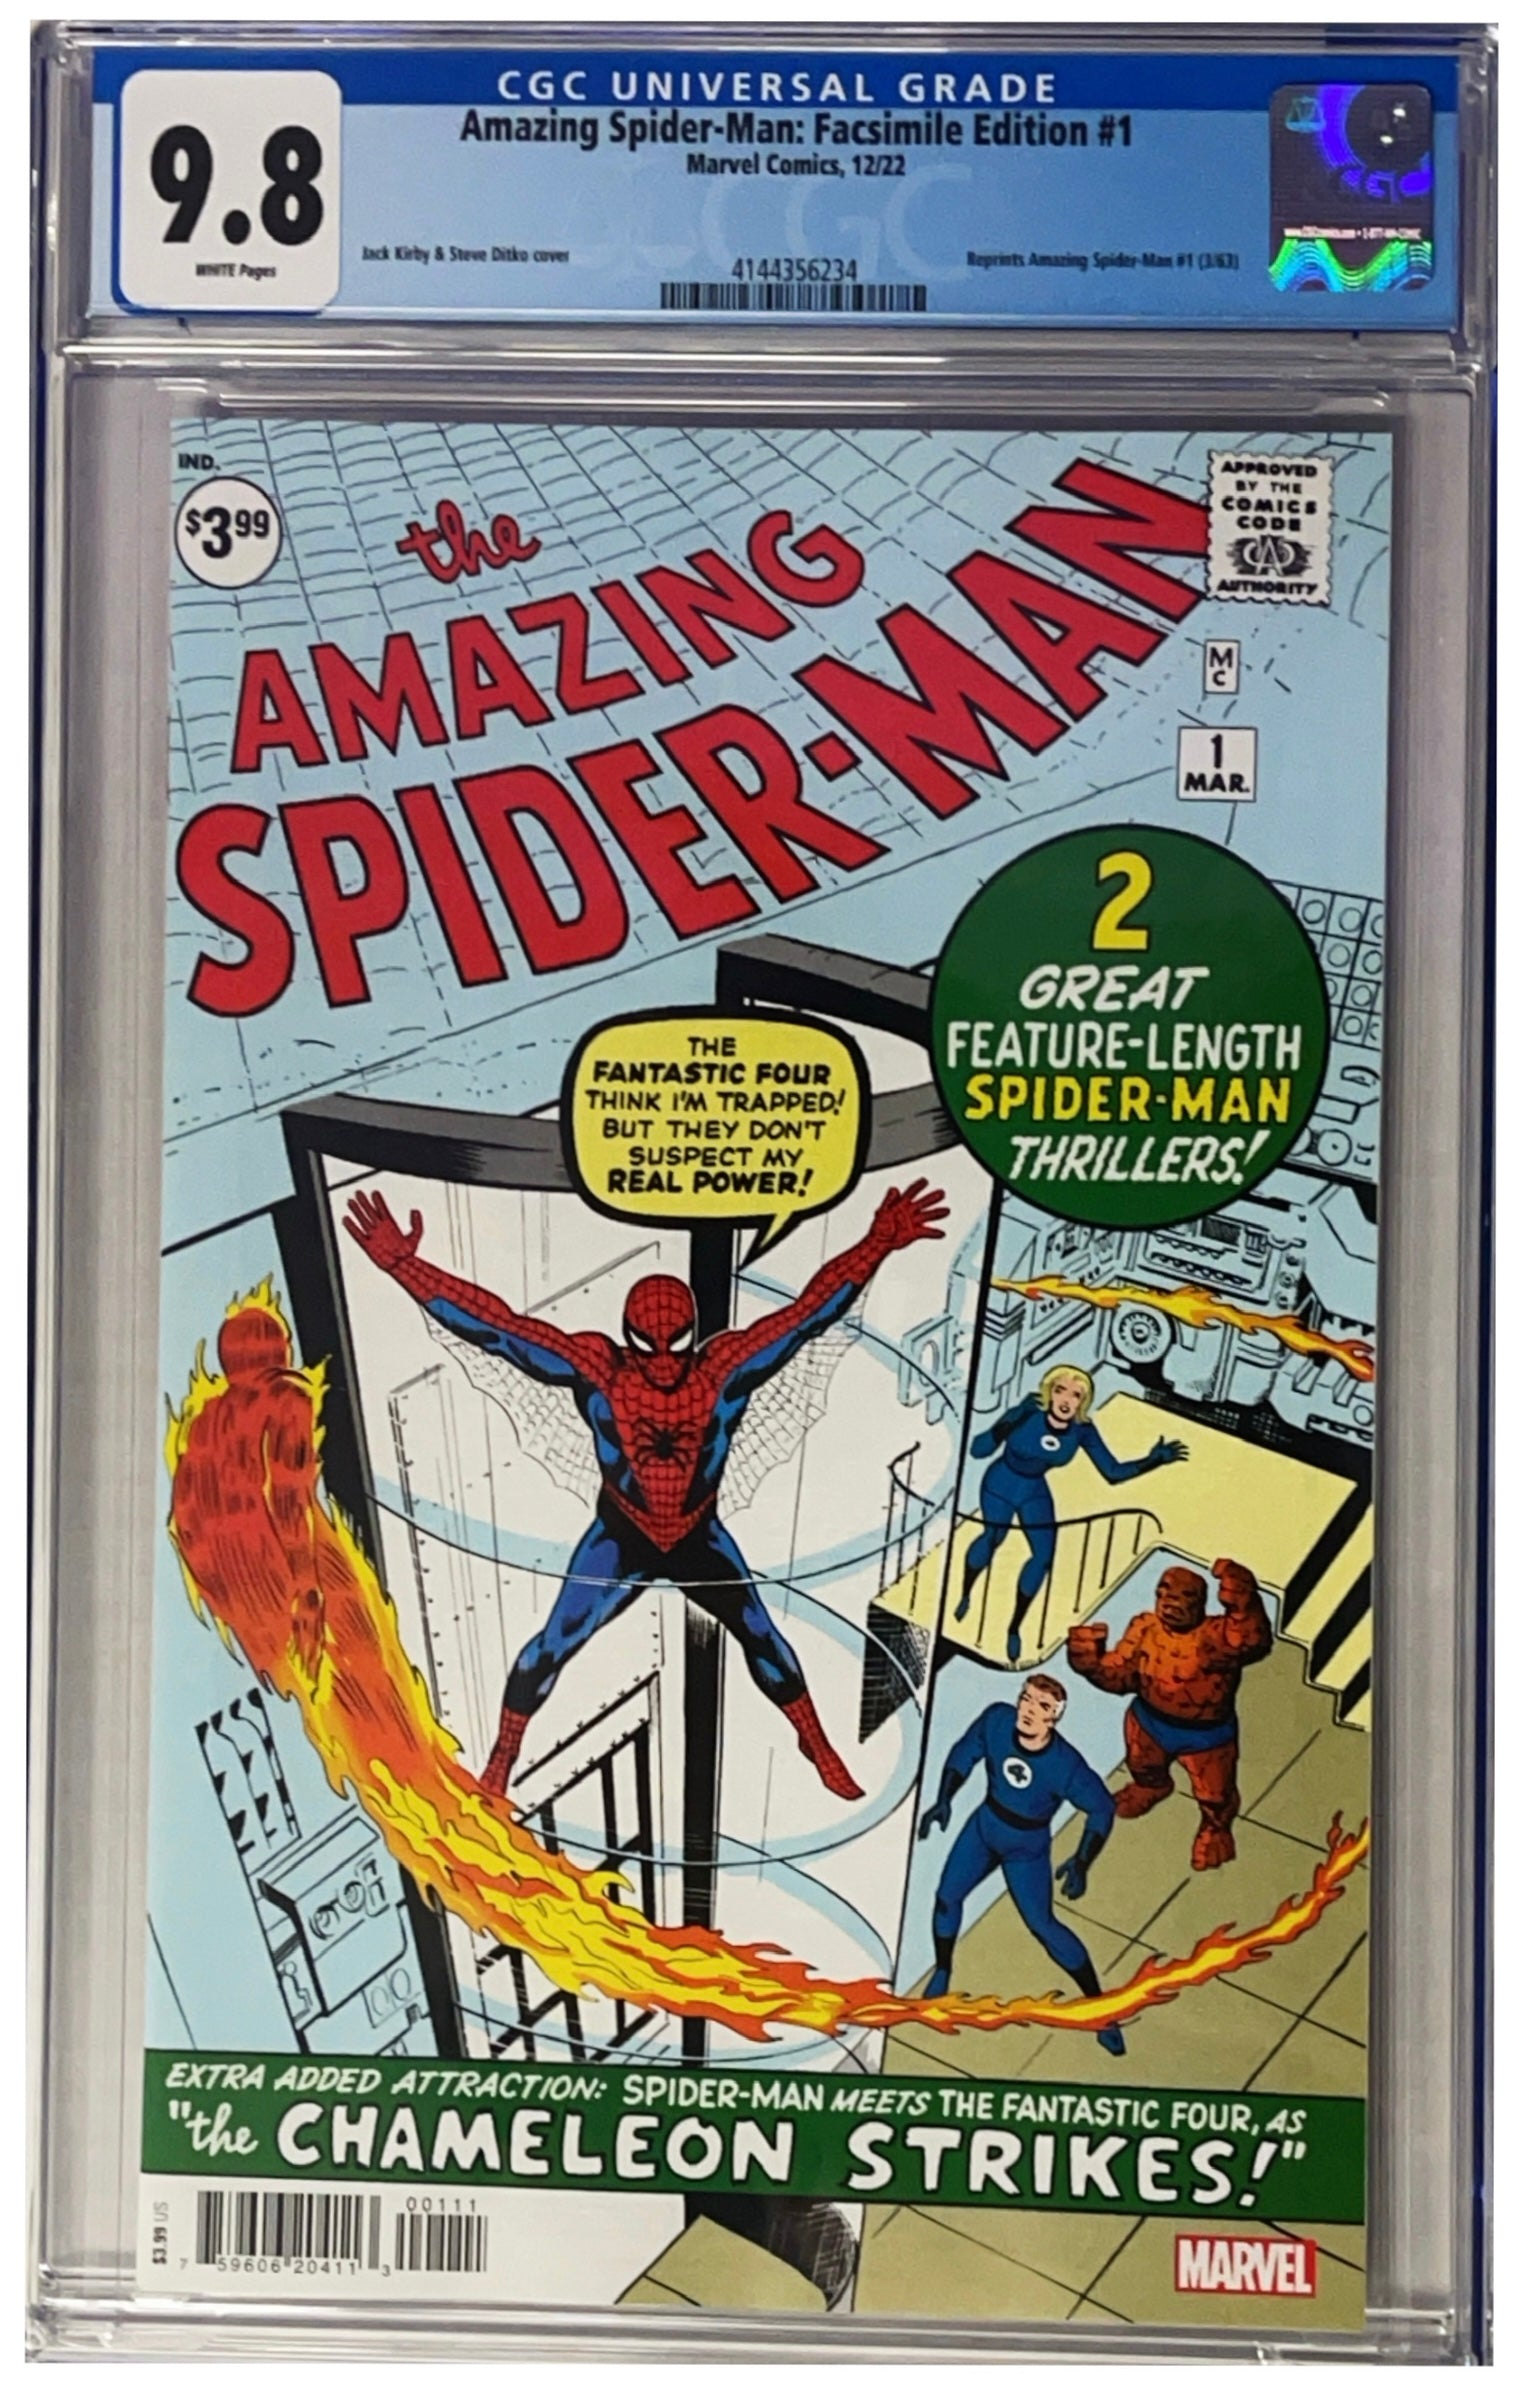 Cgc Comic - Amazing Spider-man #1 Facsimile Edition 2022 Graded 9.8